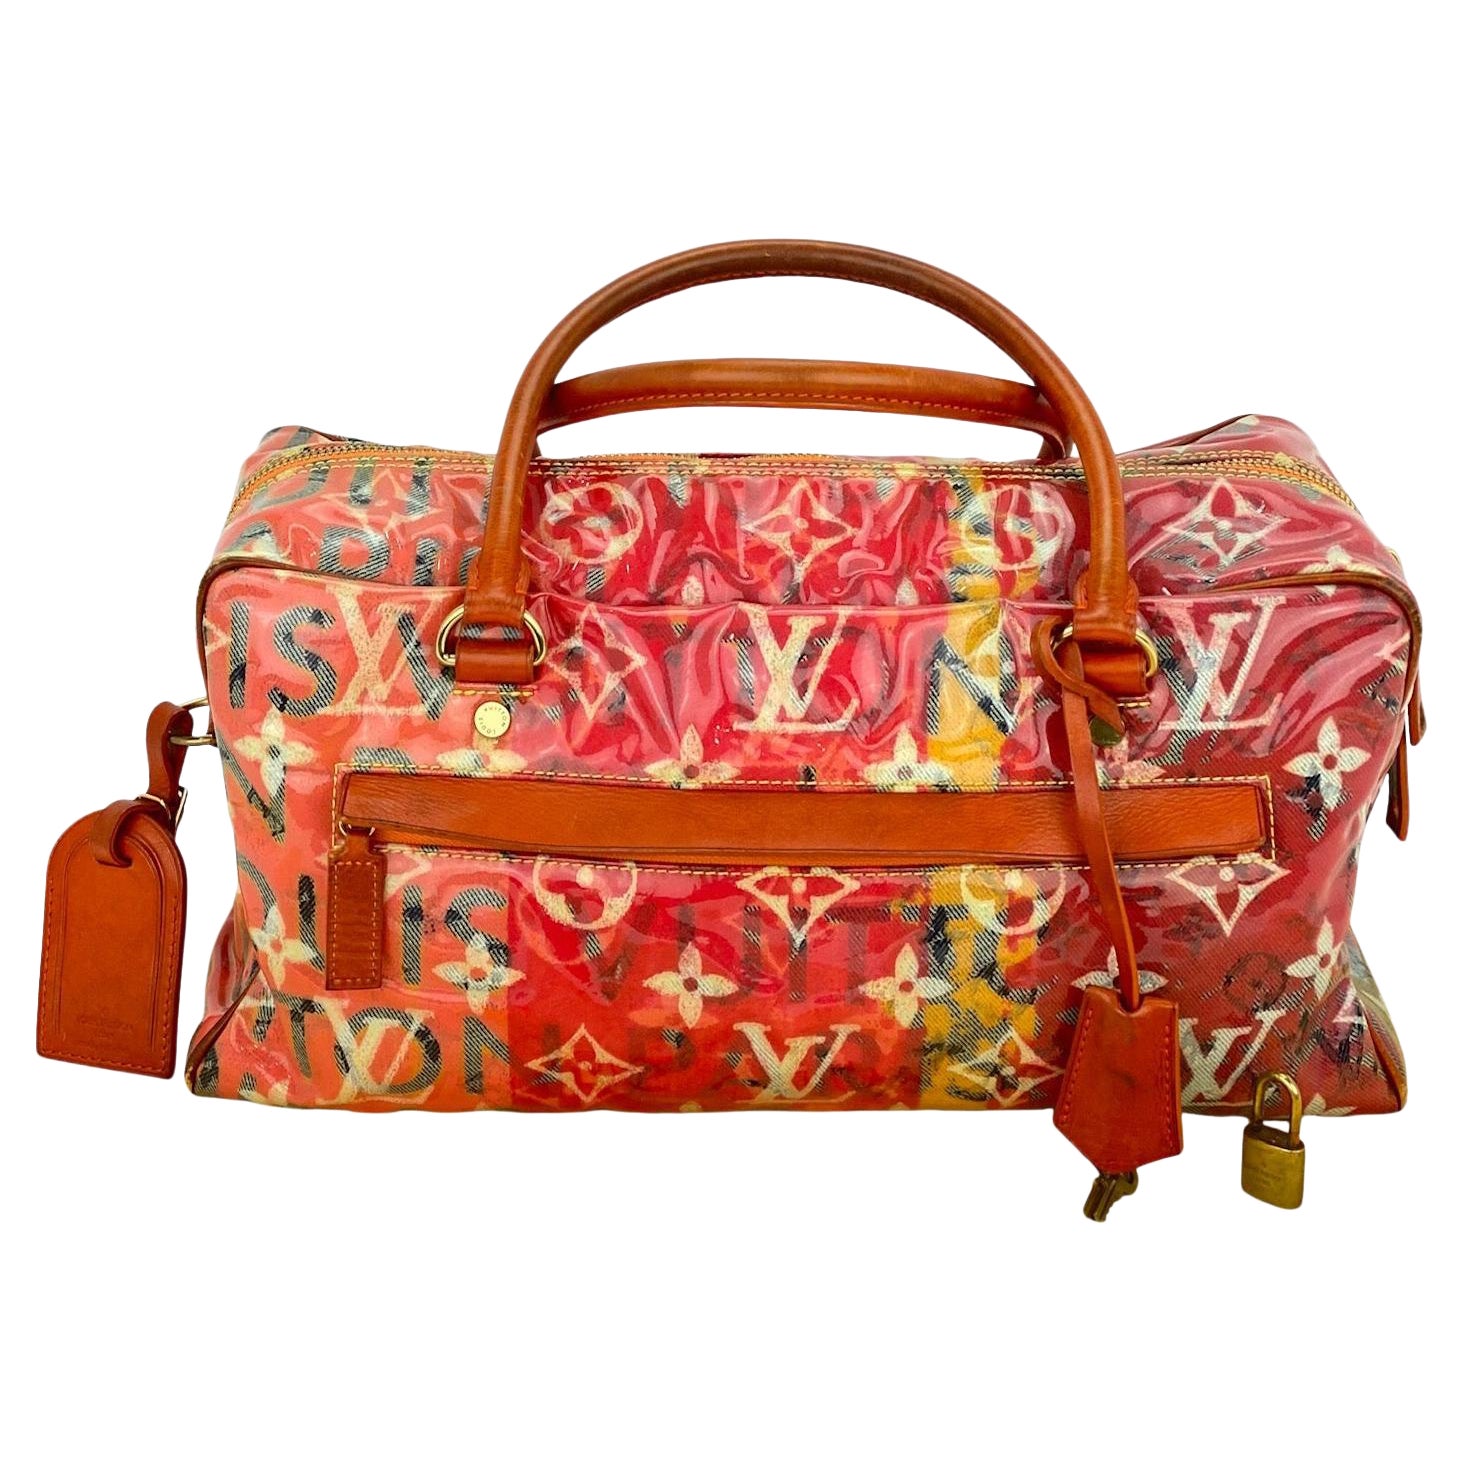 LOUIS VUITTON Limited Edition Richard Prince Pink Denim Weekender PM Travel Bag For Sale